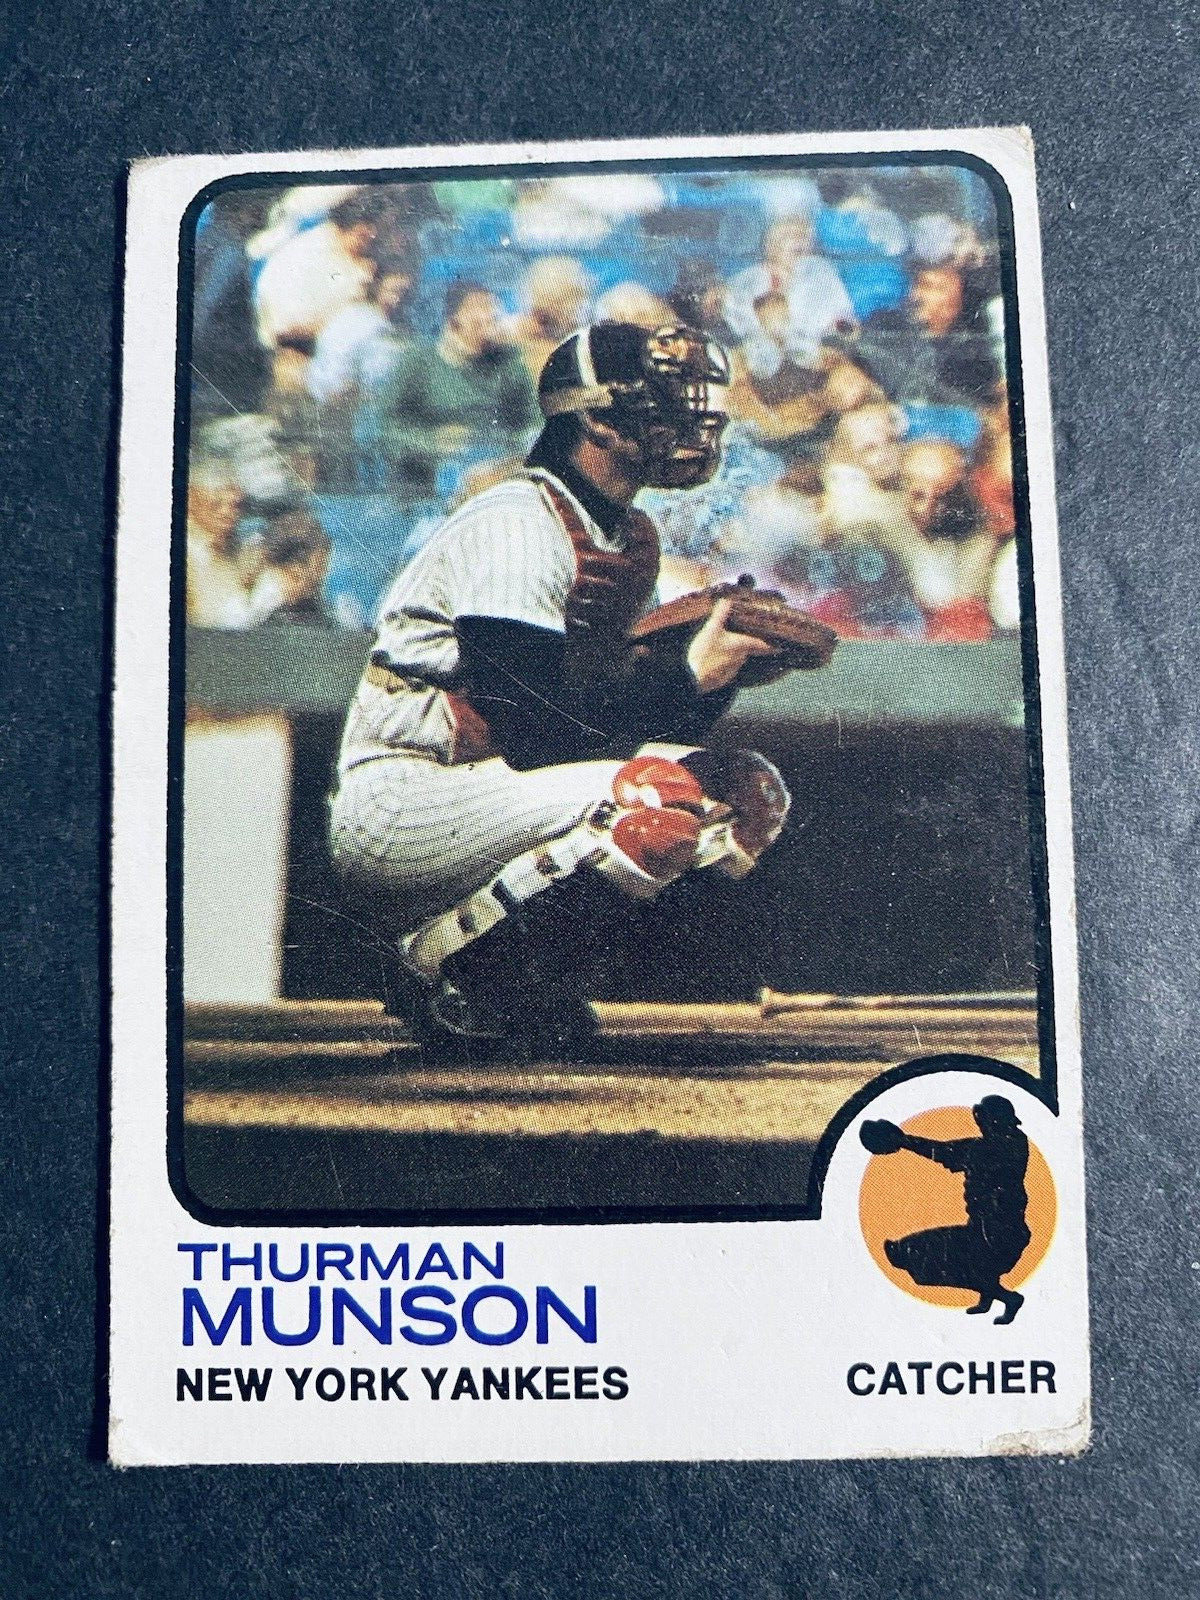 1973 Topps Baseball New York Yankees Thurman Munson Baseball Card #142 (c)